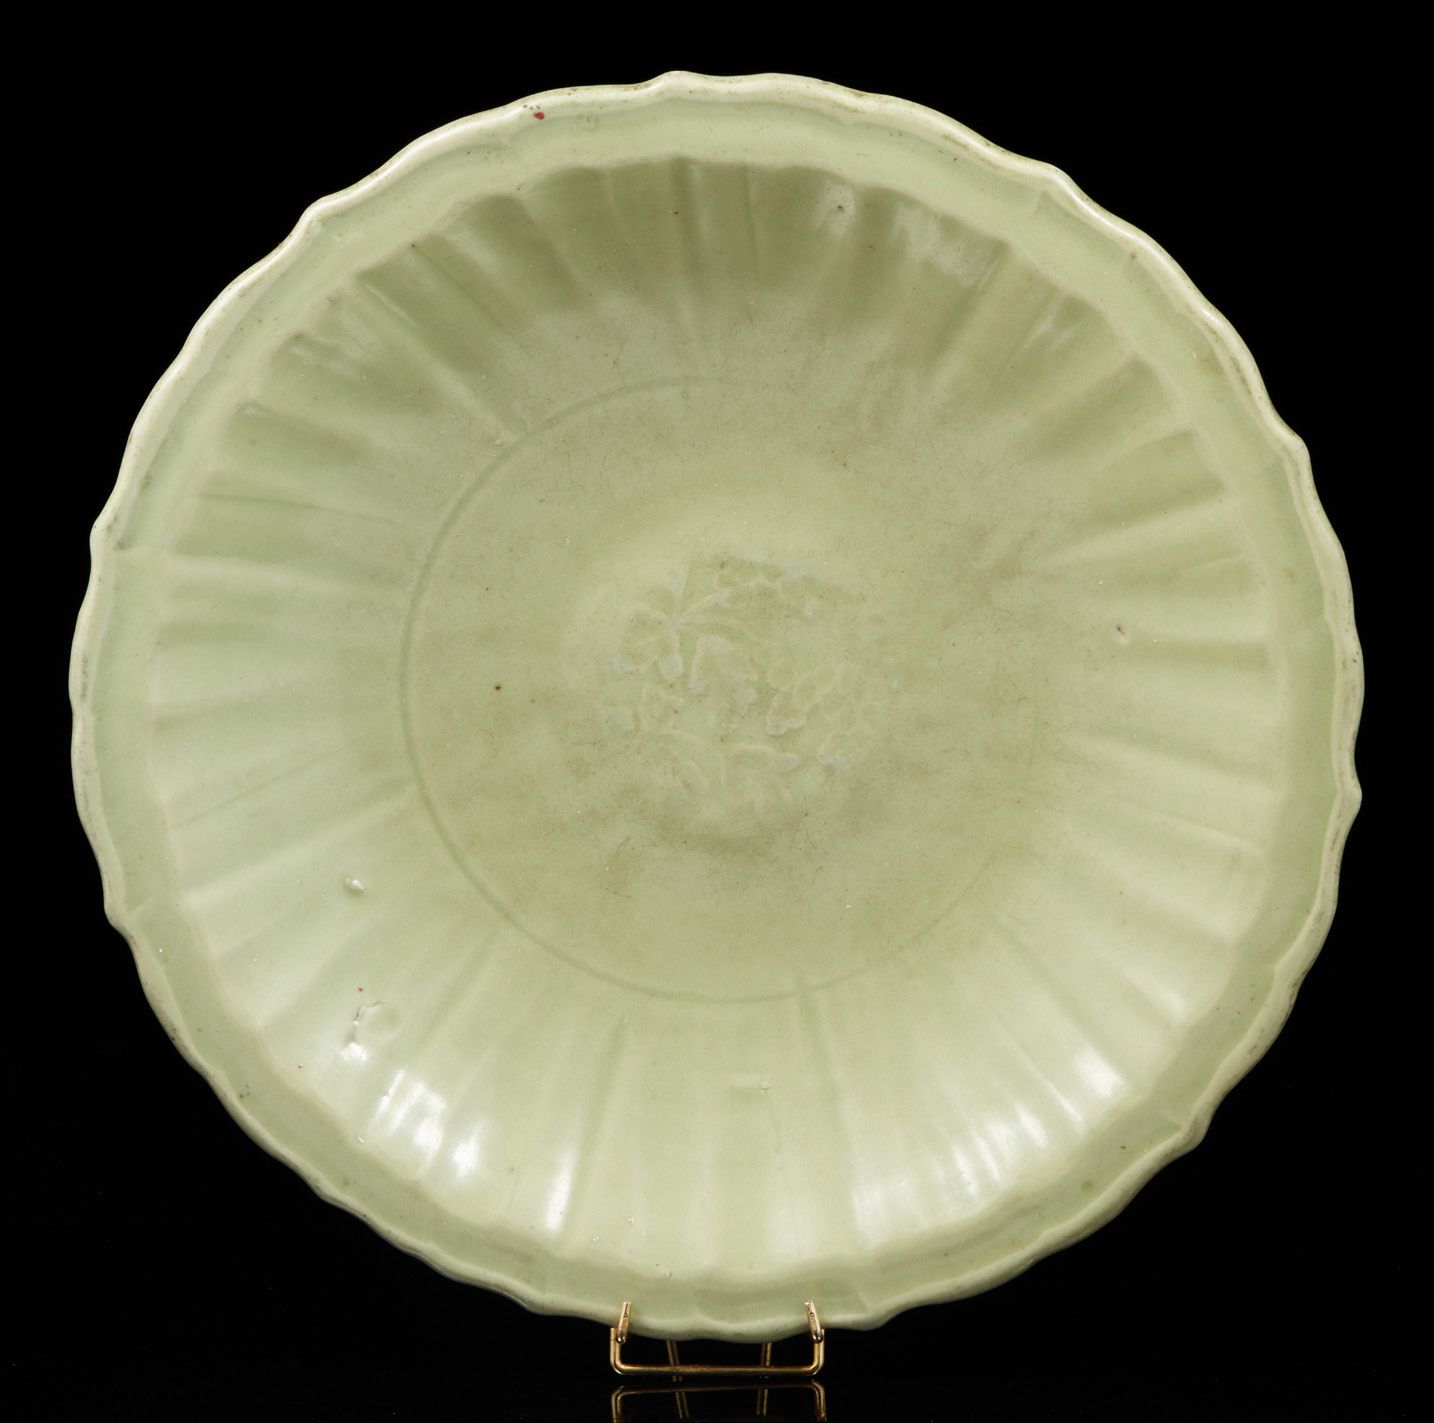 CHINE, XVIe siècle 龙泉窑青瓷珐琅彩盘，为莲花形，釉下有放射状的装饰，周围有花纹图案。
背面有缺口。
D.32.5厘米。